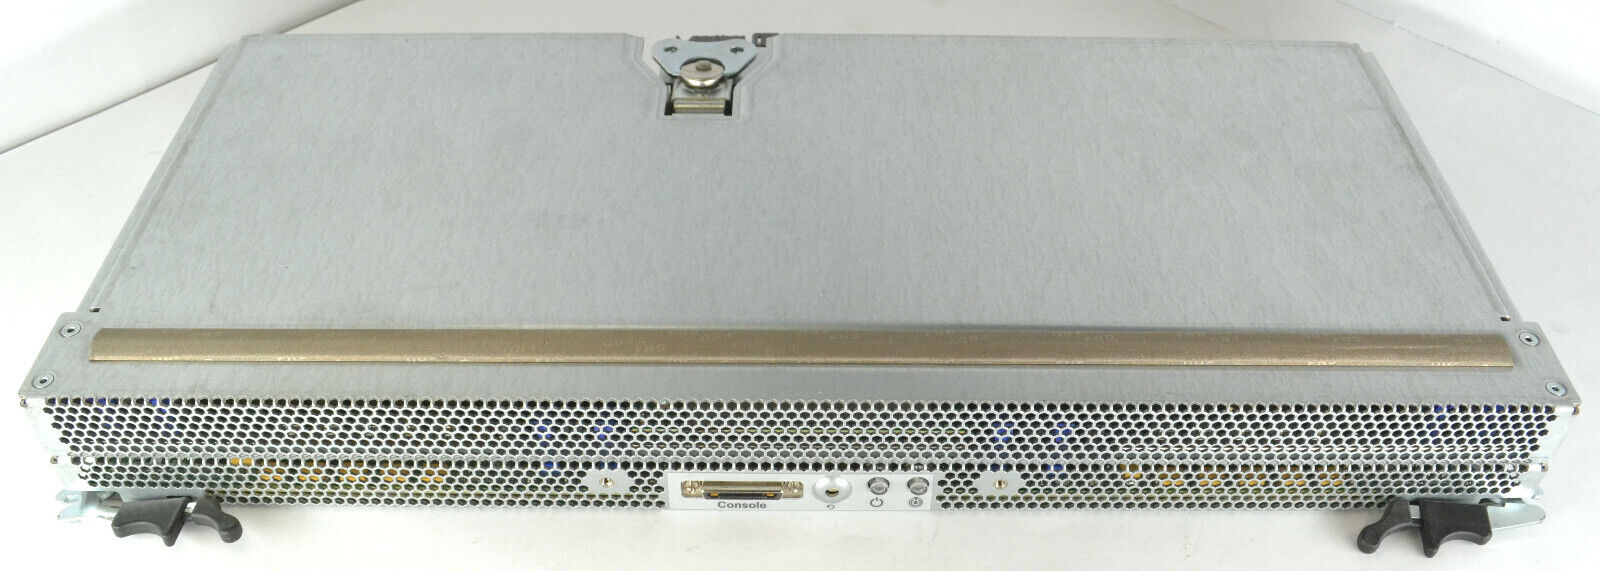 Cisco UCSC-C3X60-SVRNB C3160 Server Node with Raid Card